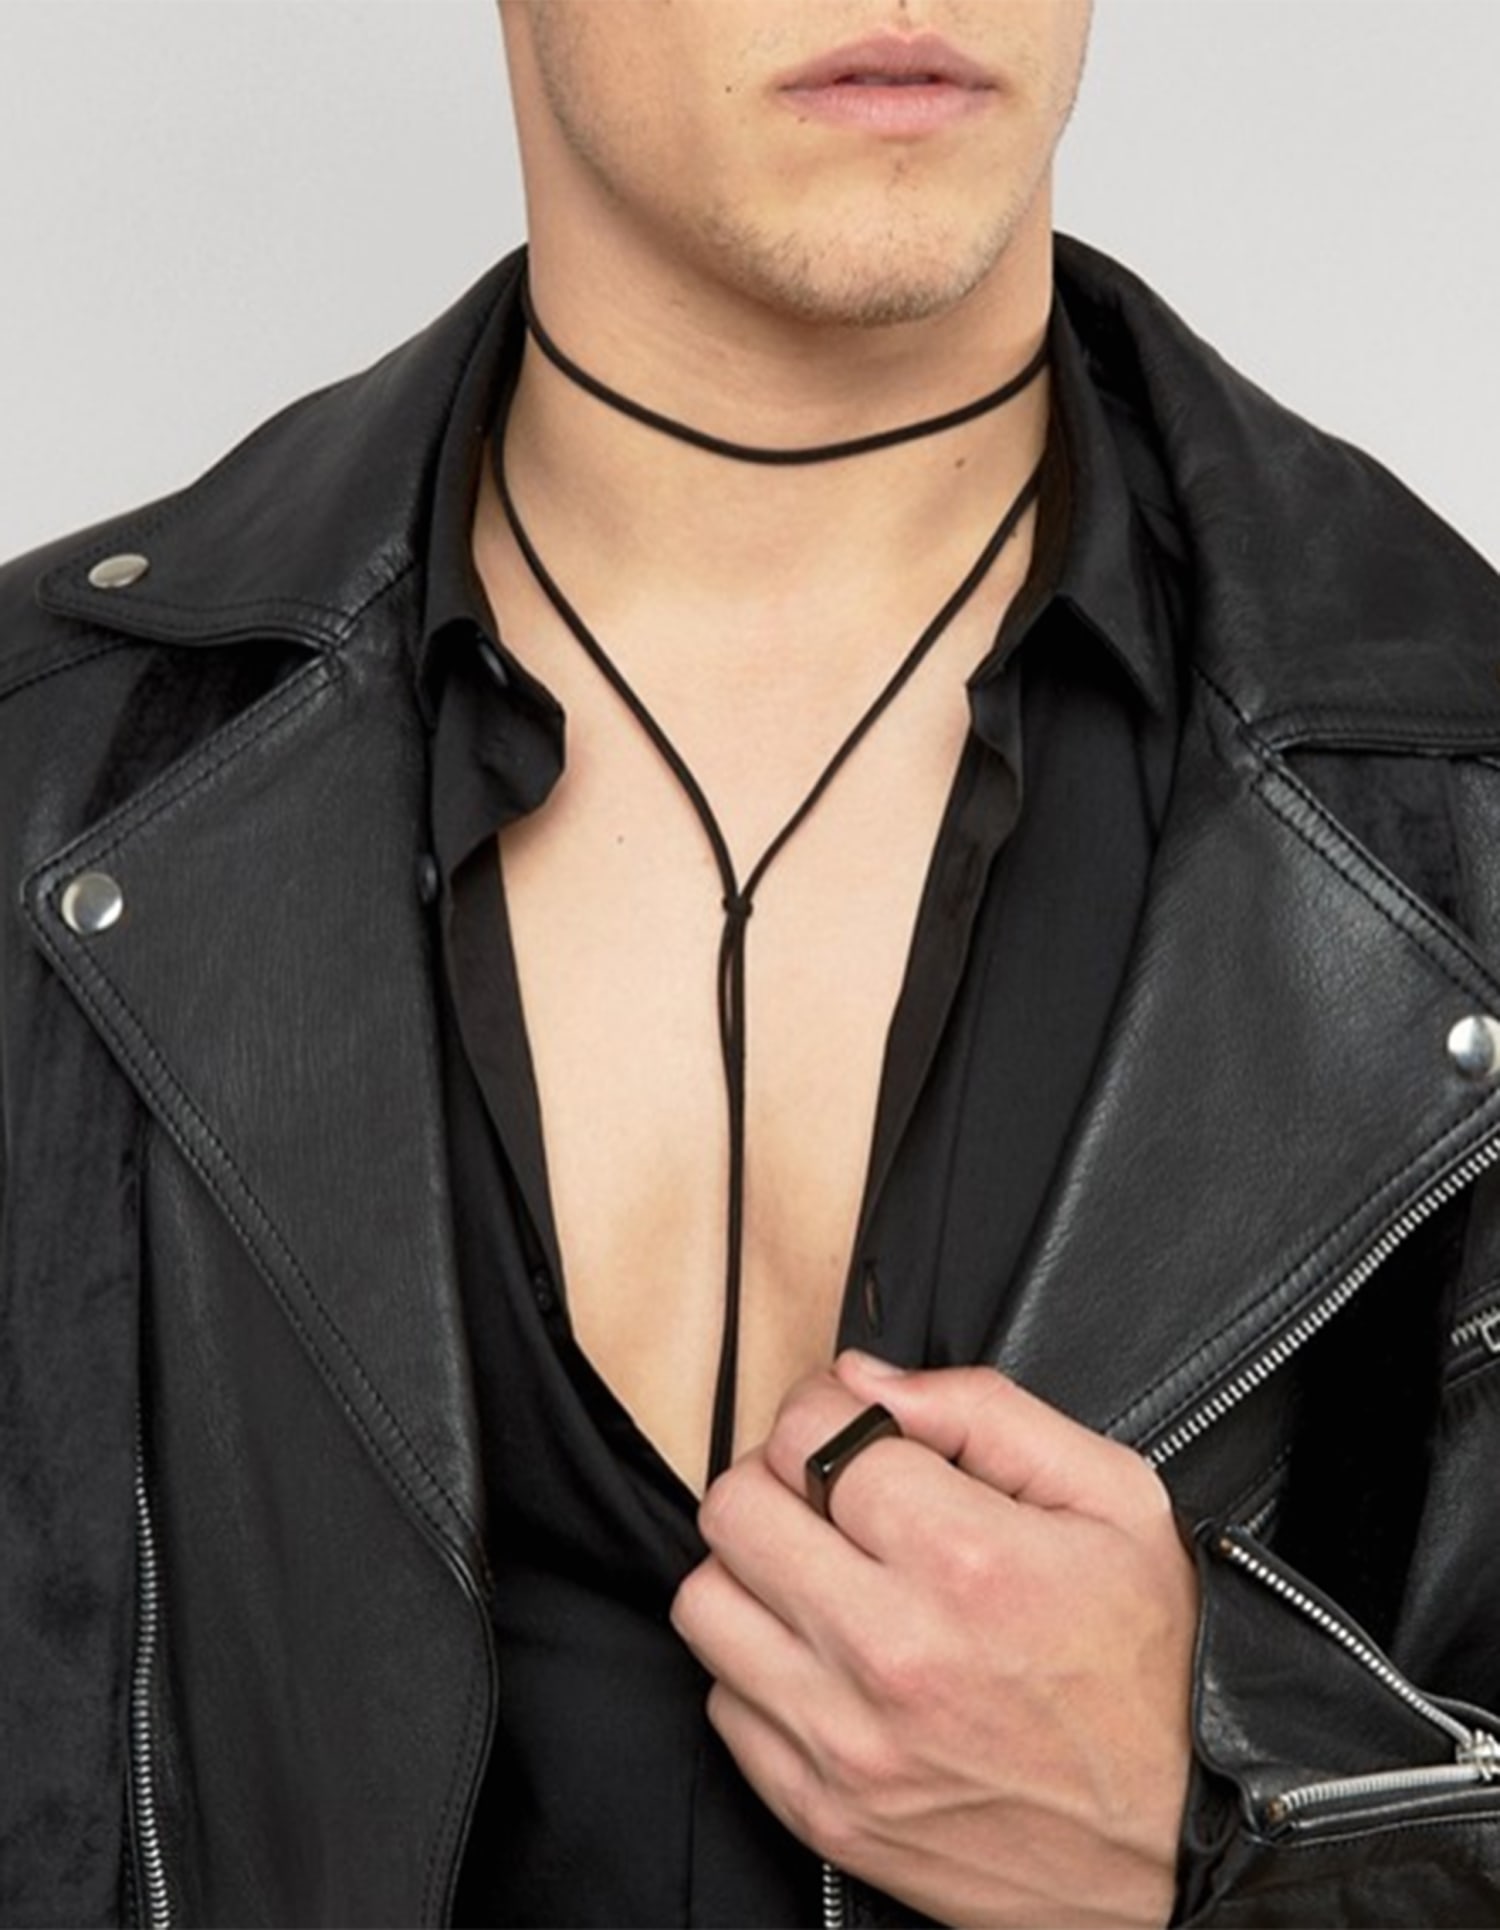 male choker necklace